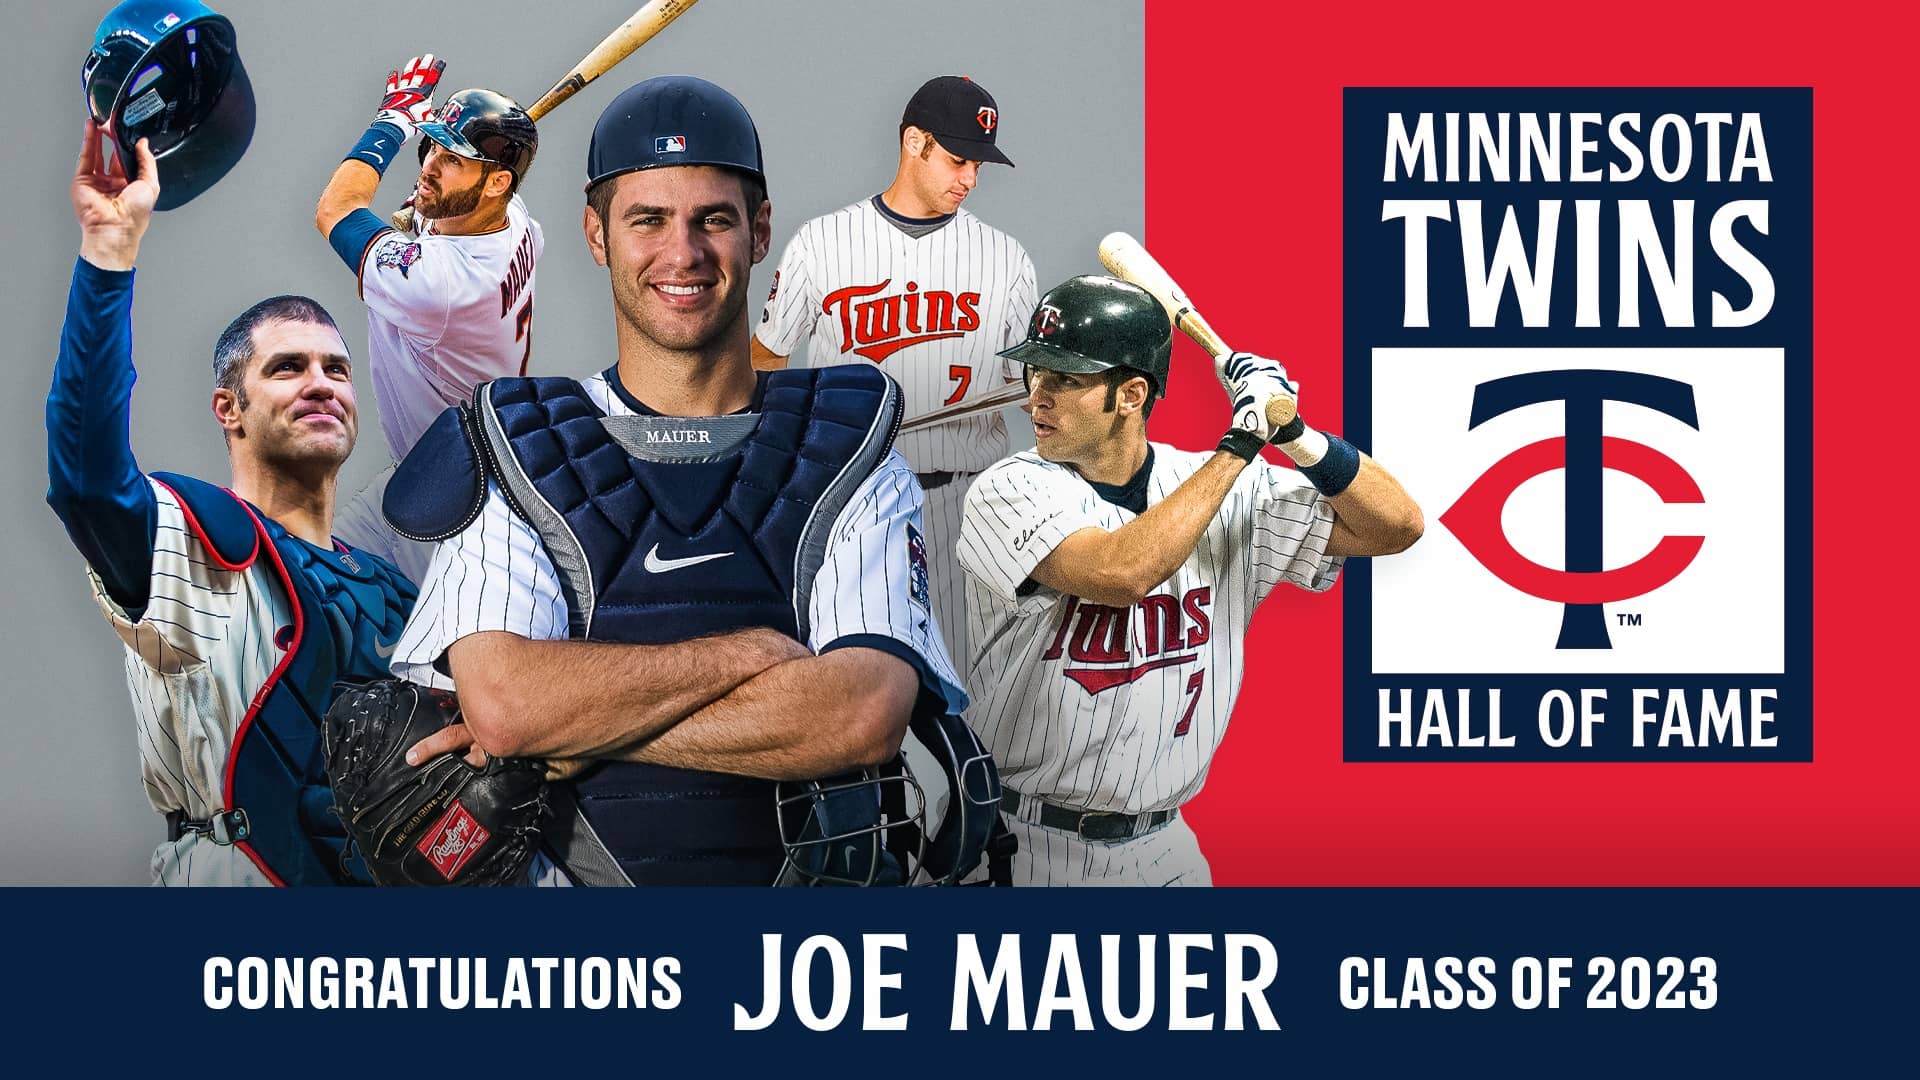 Joe Mauer To Become The 38th Member Of The Minnesota Twins Hall Of